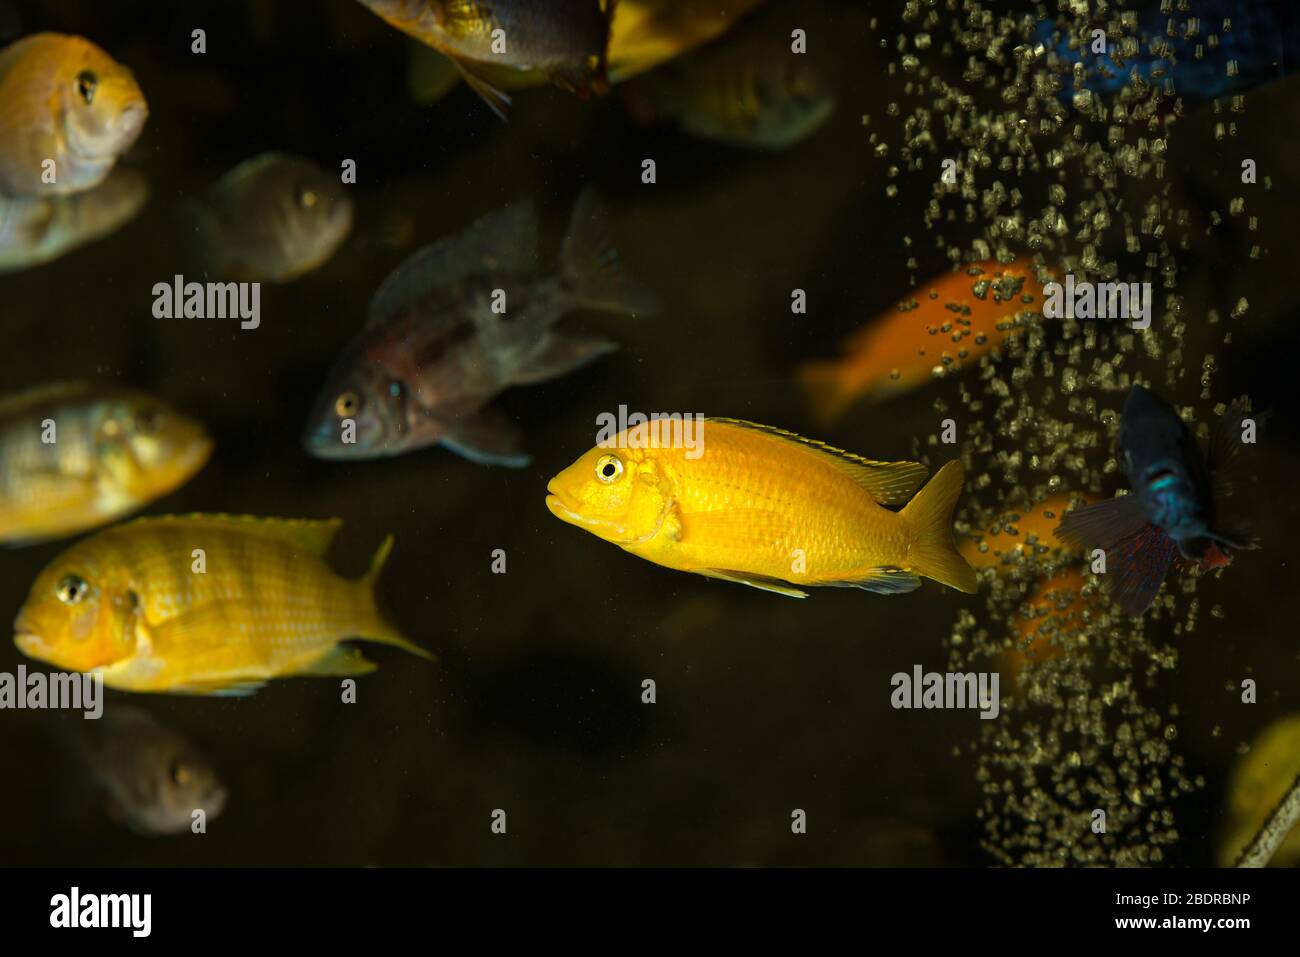 Lombardoi and african cichlids swimming in aquarium Stock Photo